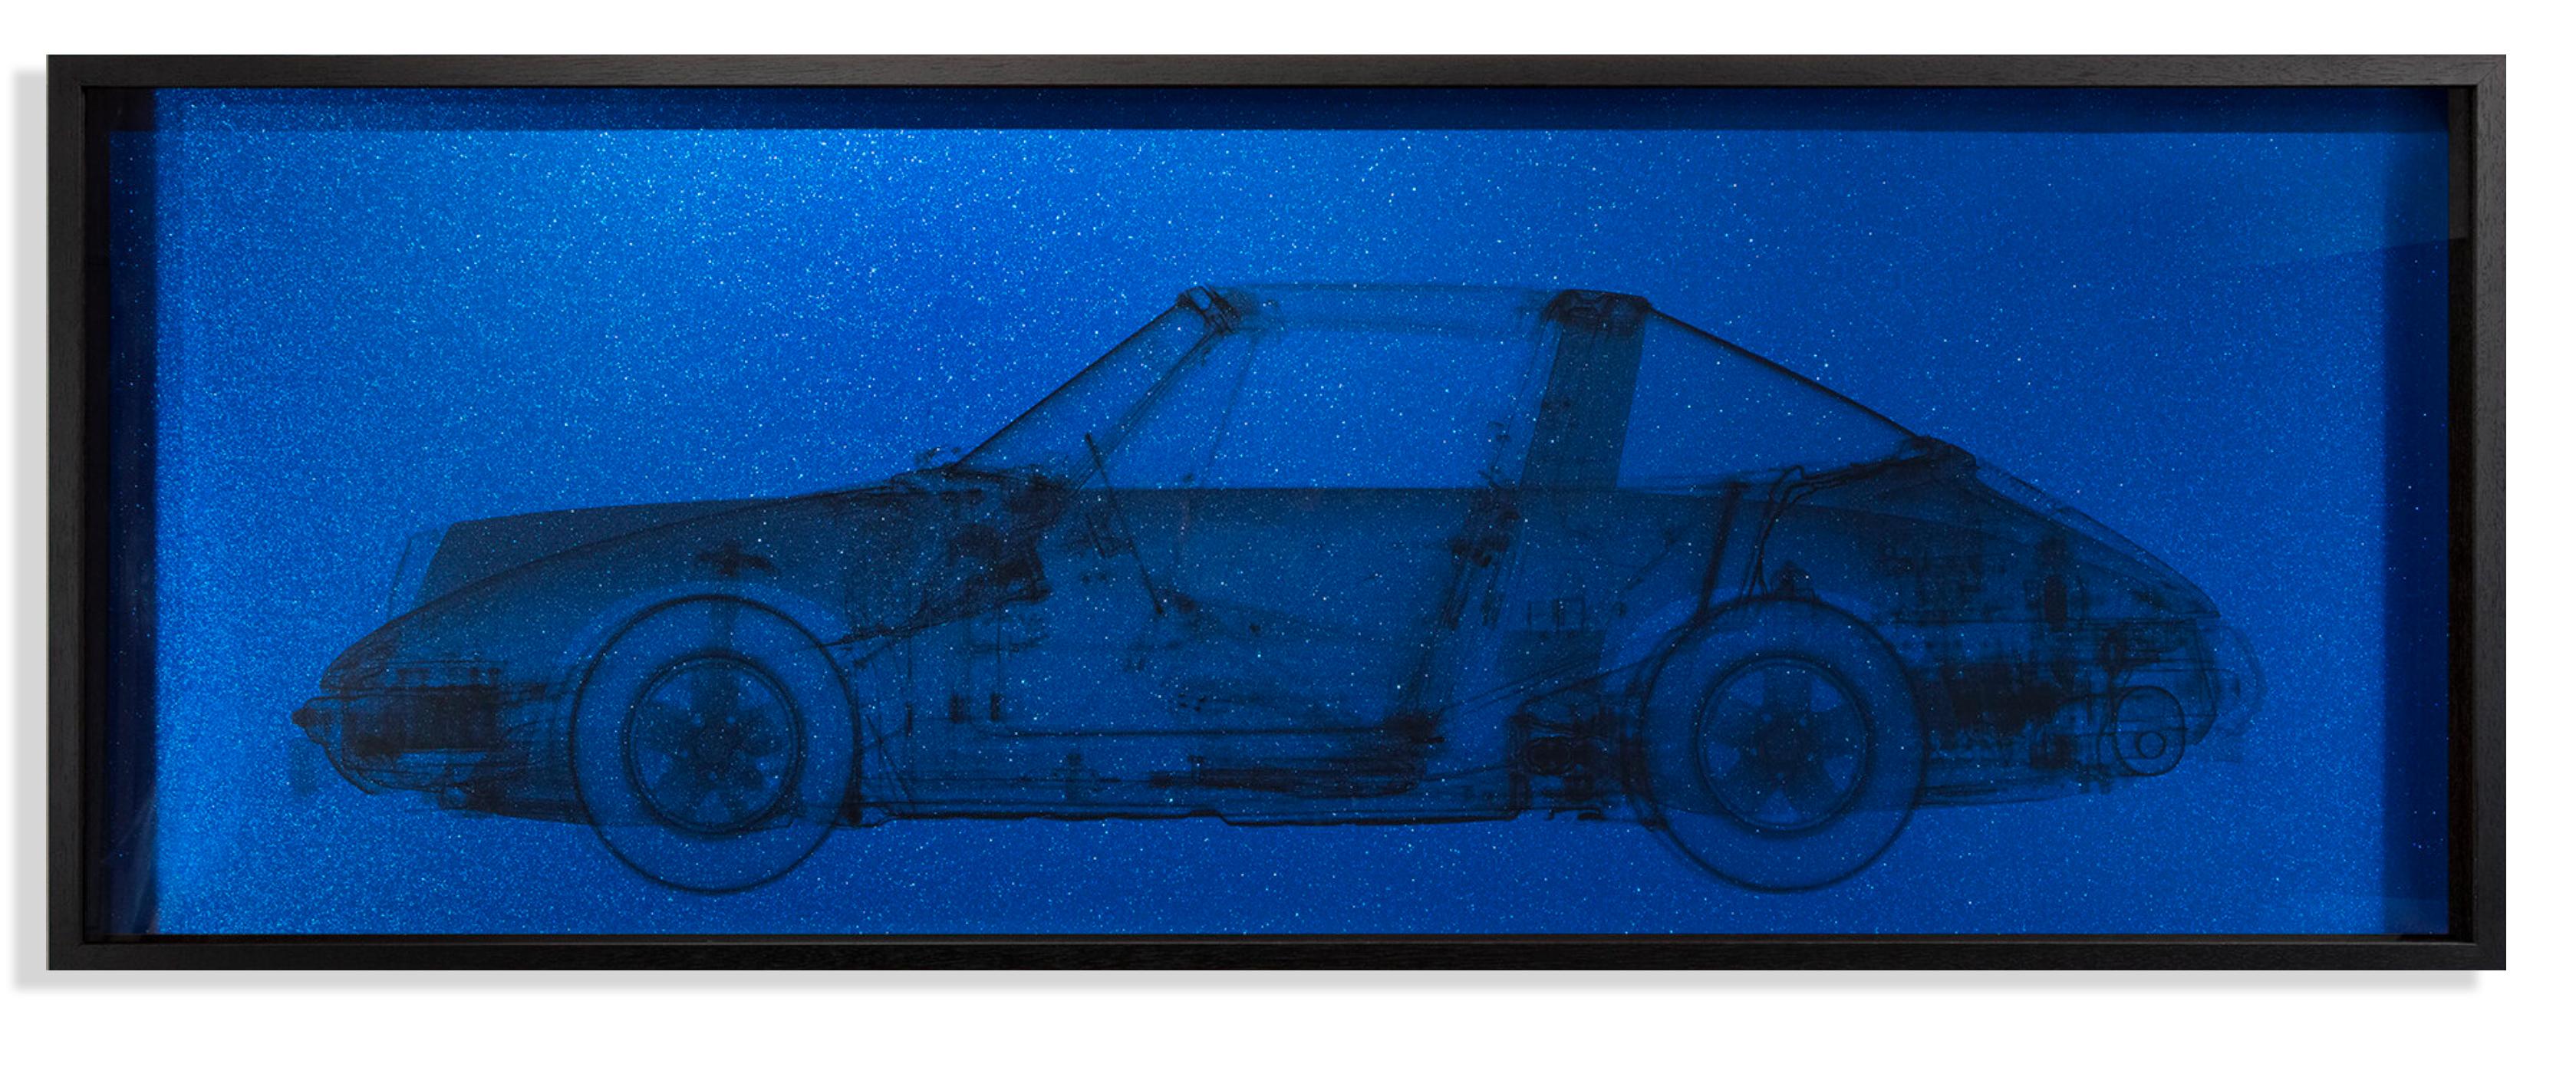 Porsche 911 Targa Metallic Blue / X-Ray Print / Radiographic Imaging  - Photograph by Nick Veasey